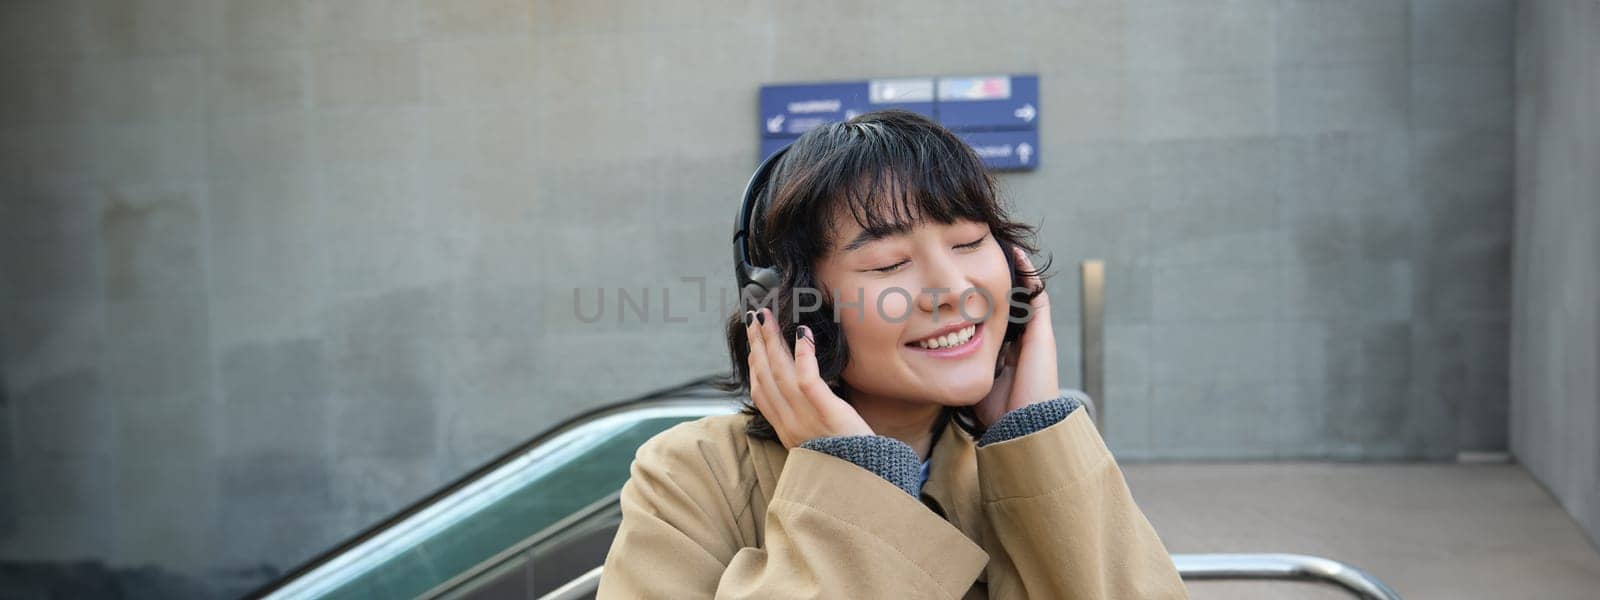 Portrait of happy woman, korean girl in headphones, listening music in headphones, enjoying sound of earphones, laughing and smiling by Benzoix